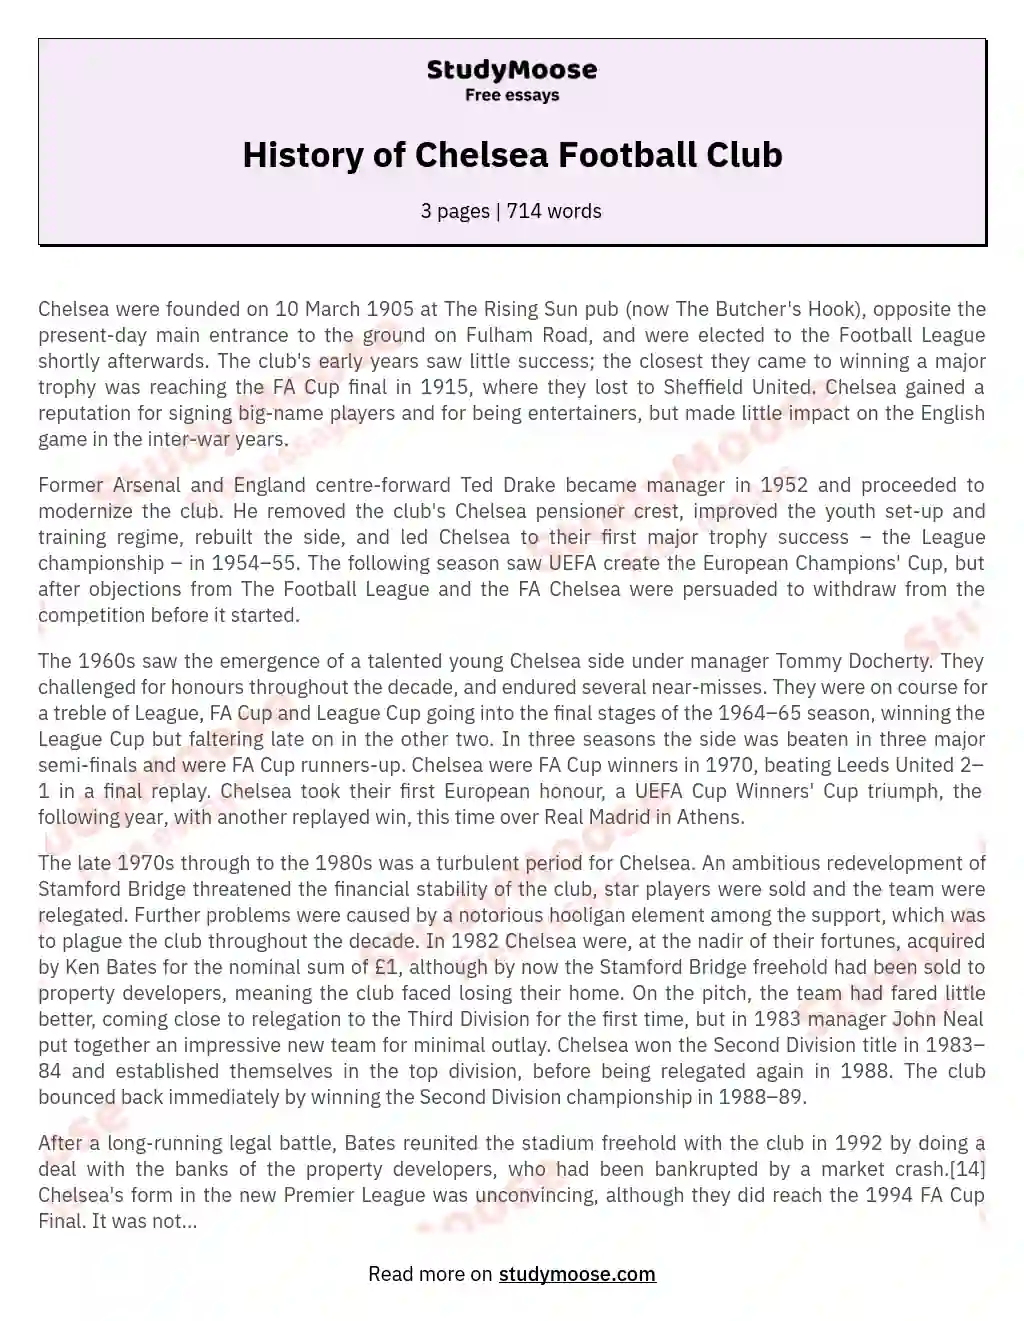 History of Chelsea Football Club essay